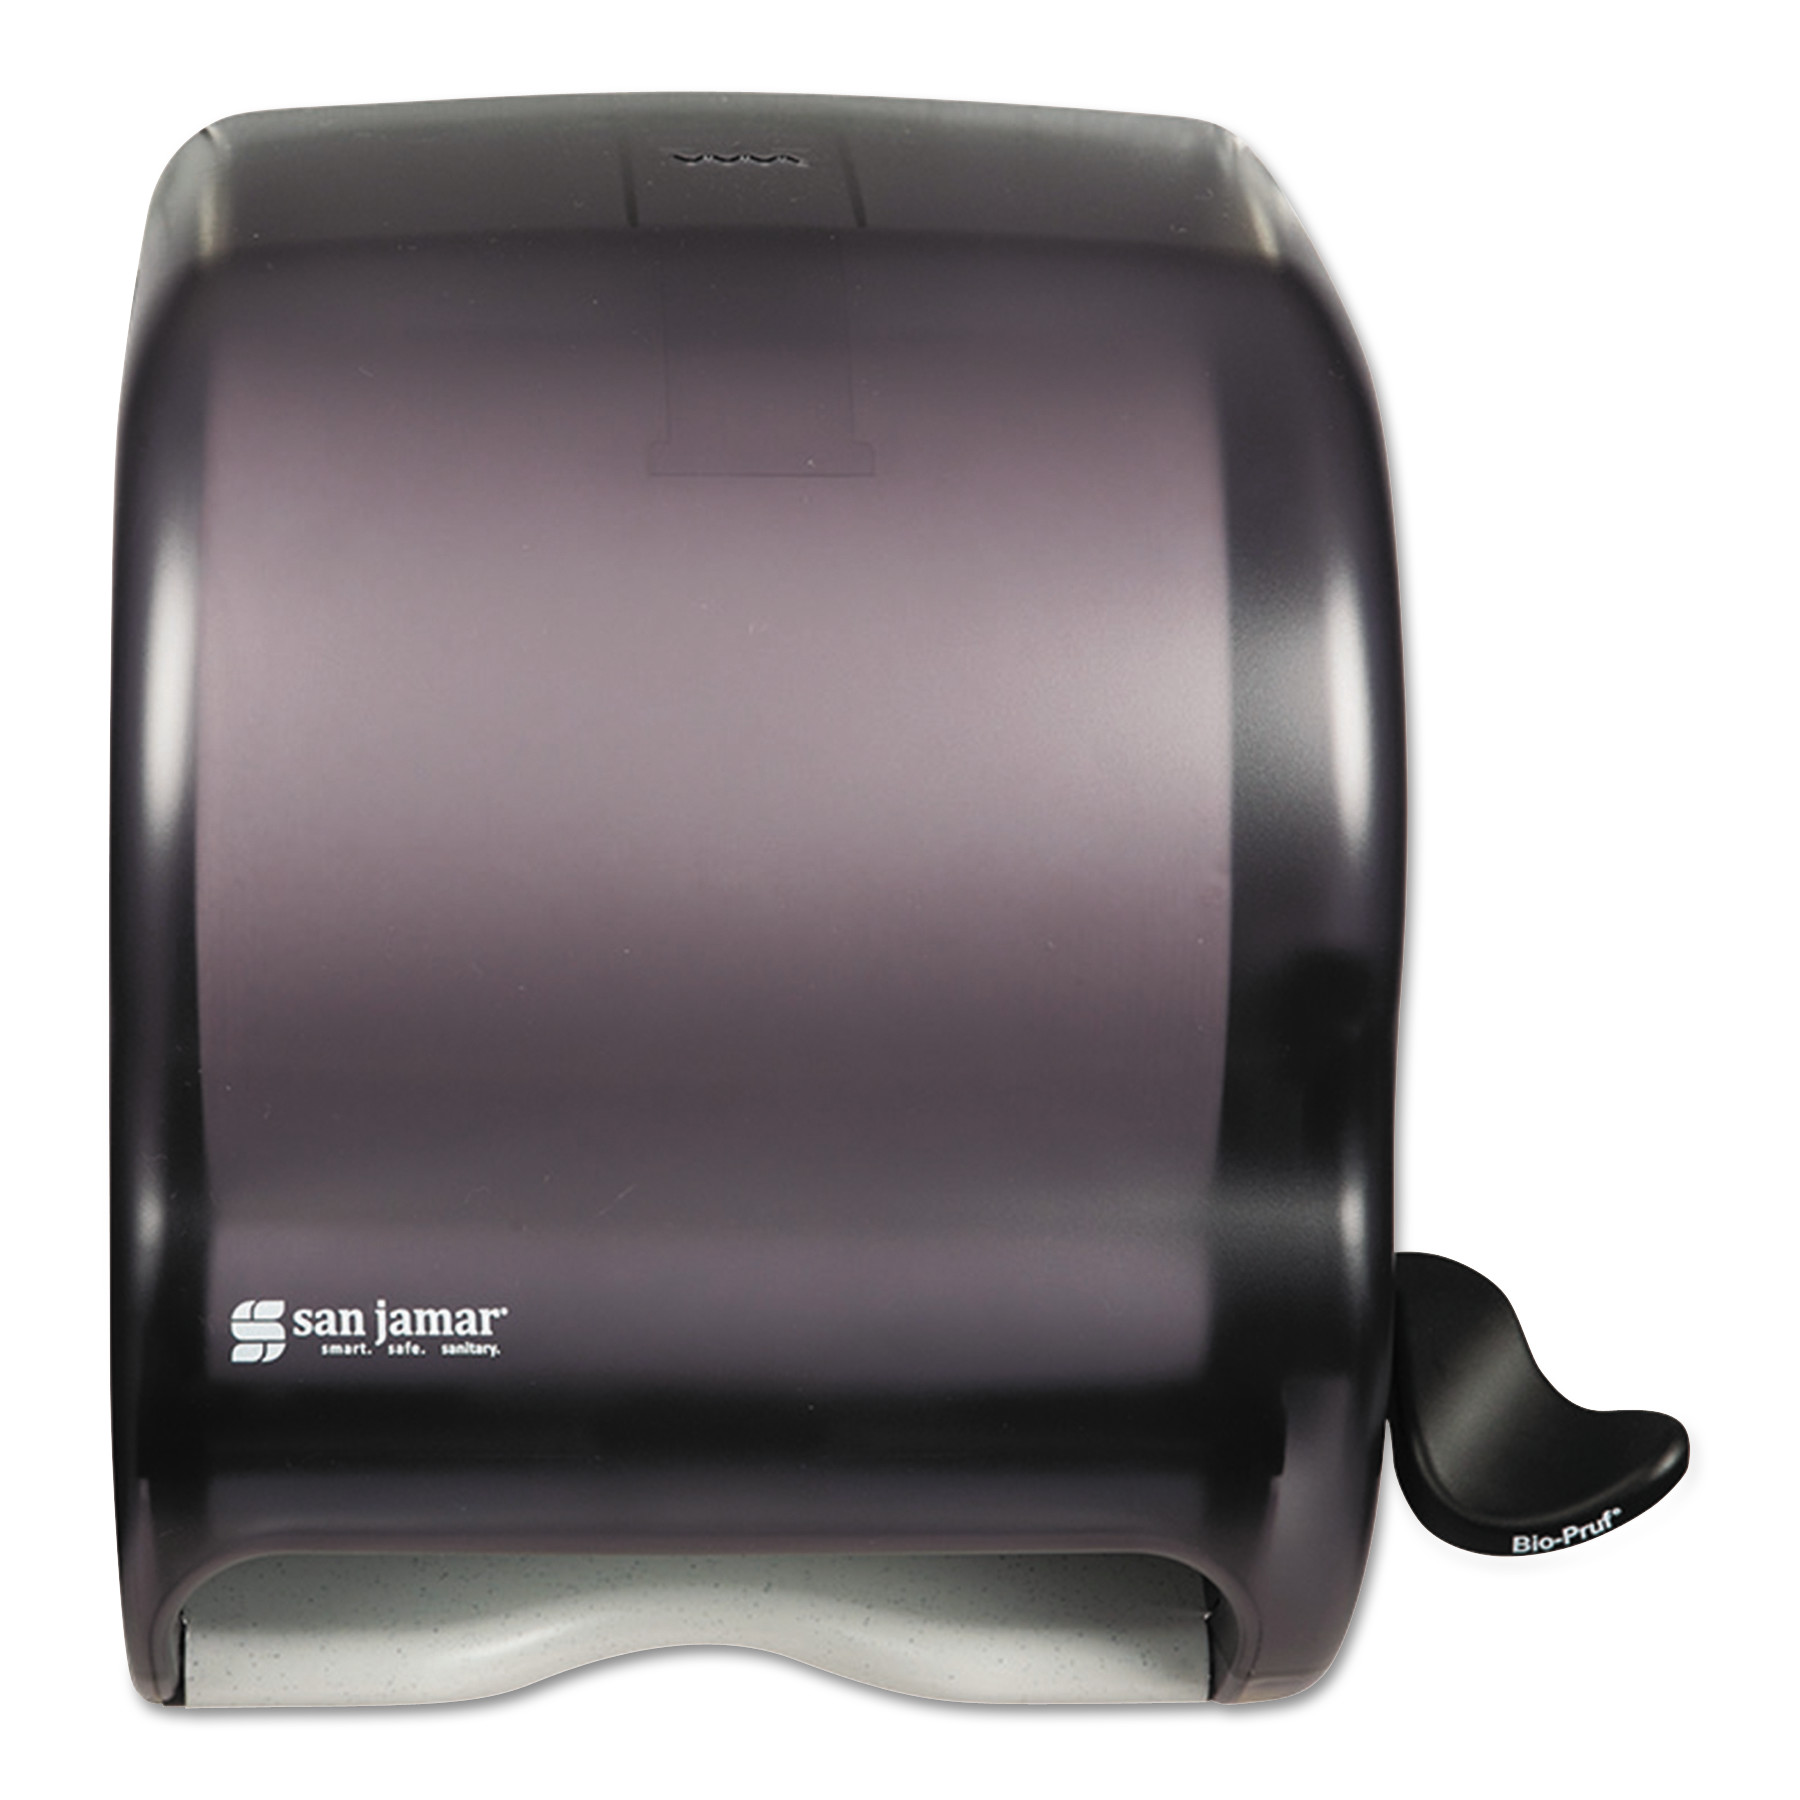 San Jamar Element Lever Roll Towel Dispenser - Classic, Black, 12.5